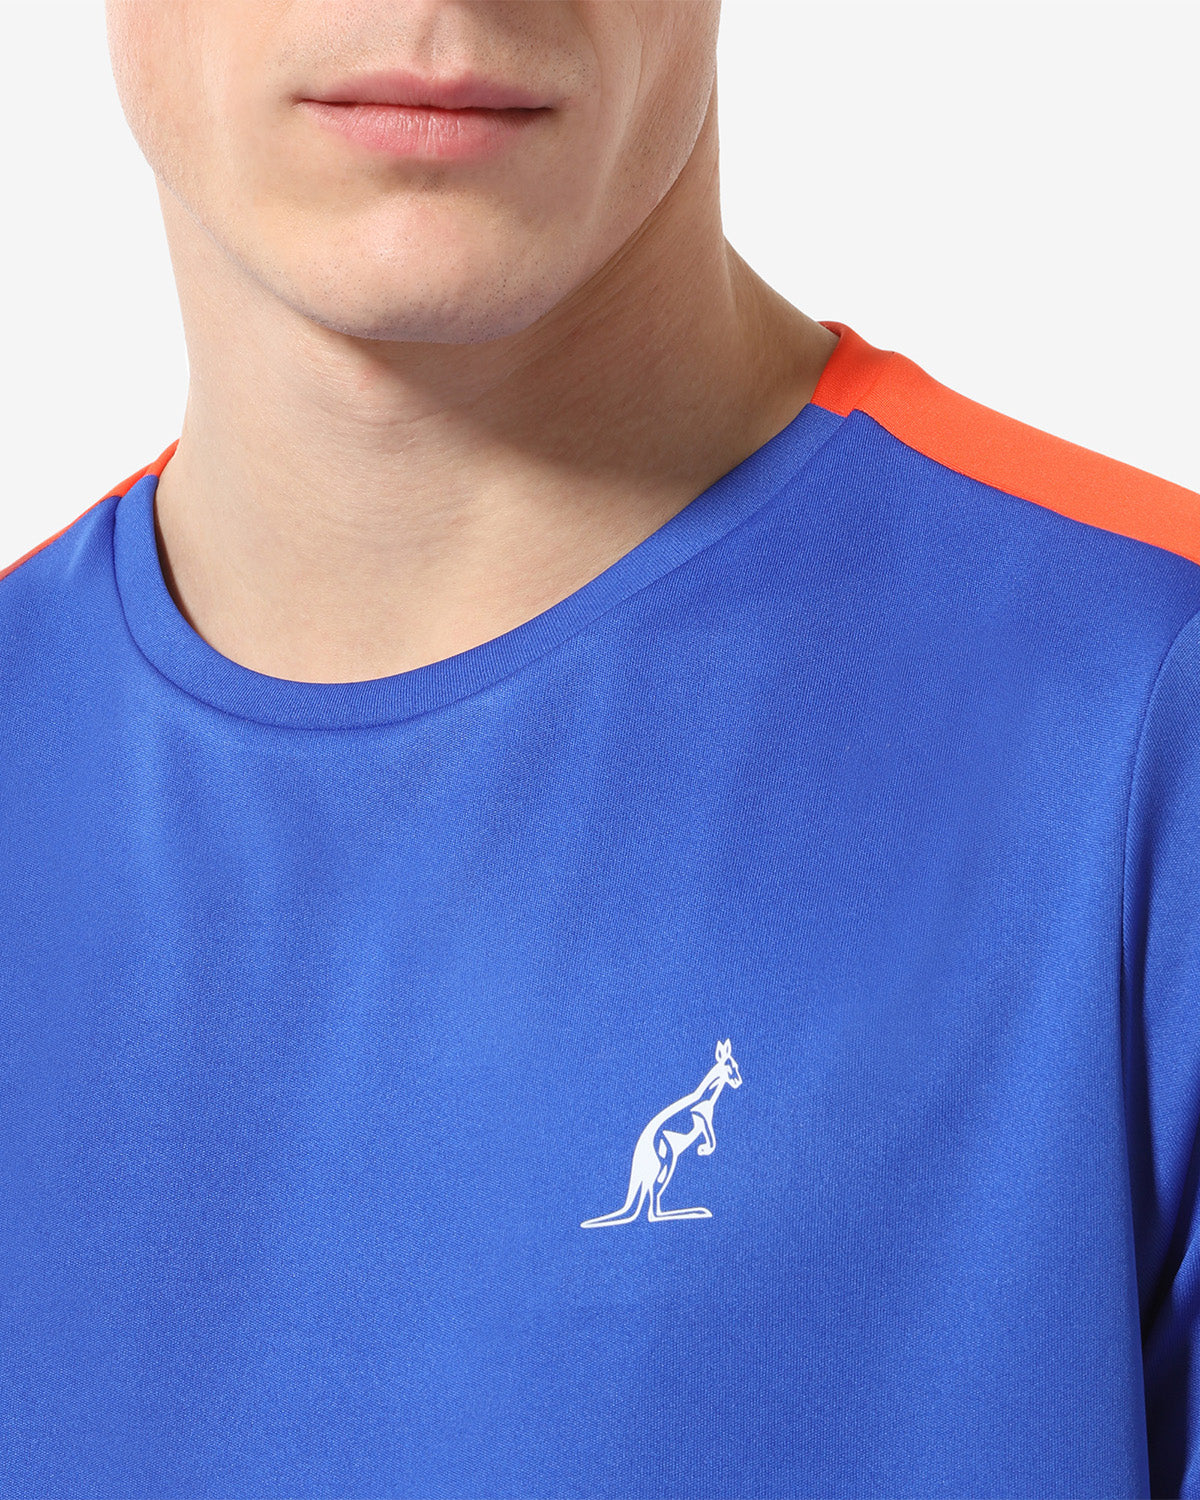 Energy T-shirt: Australian Tennis 